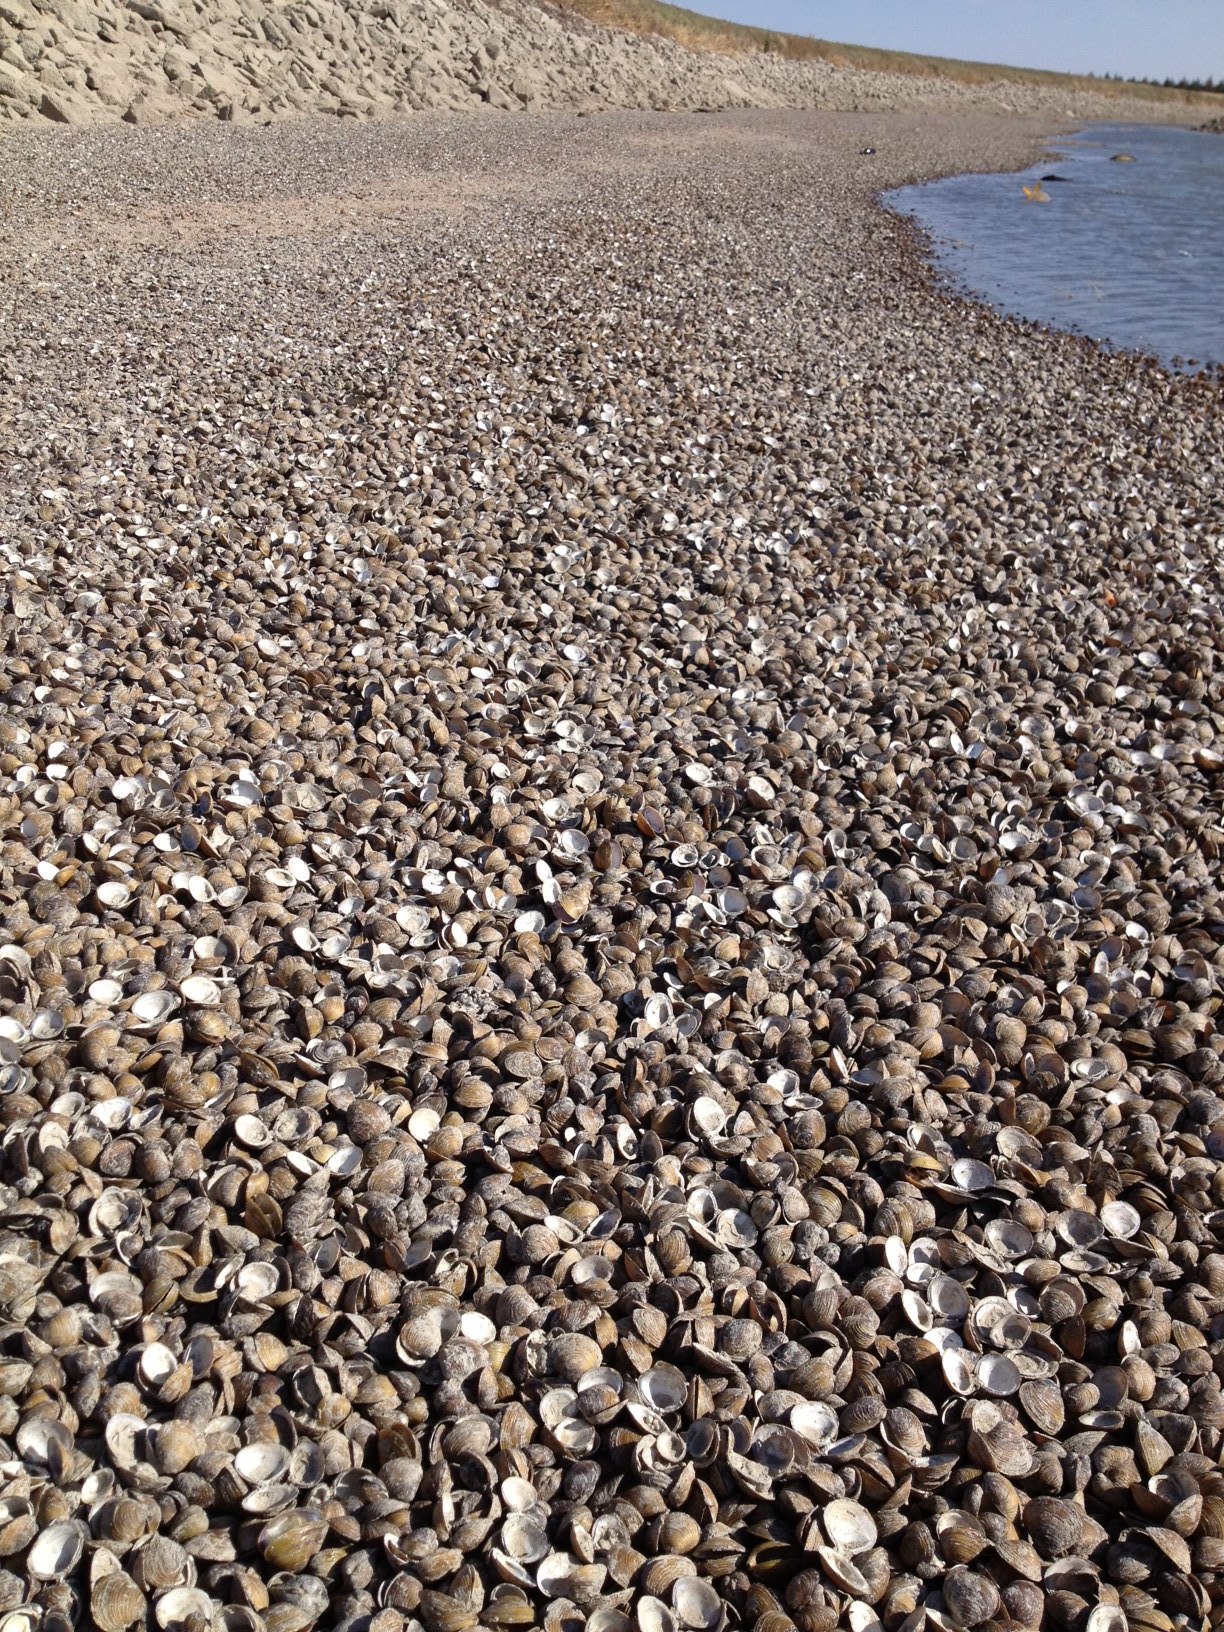 Dead Asian Clams on Shore